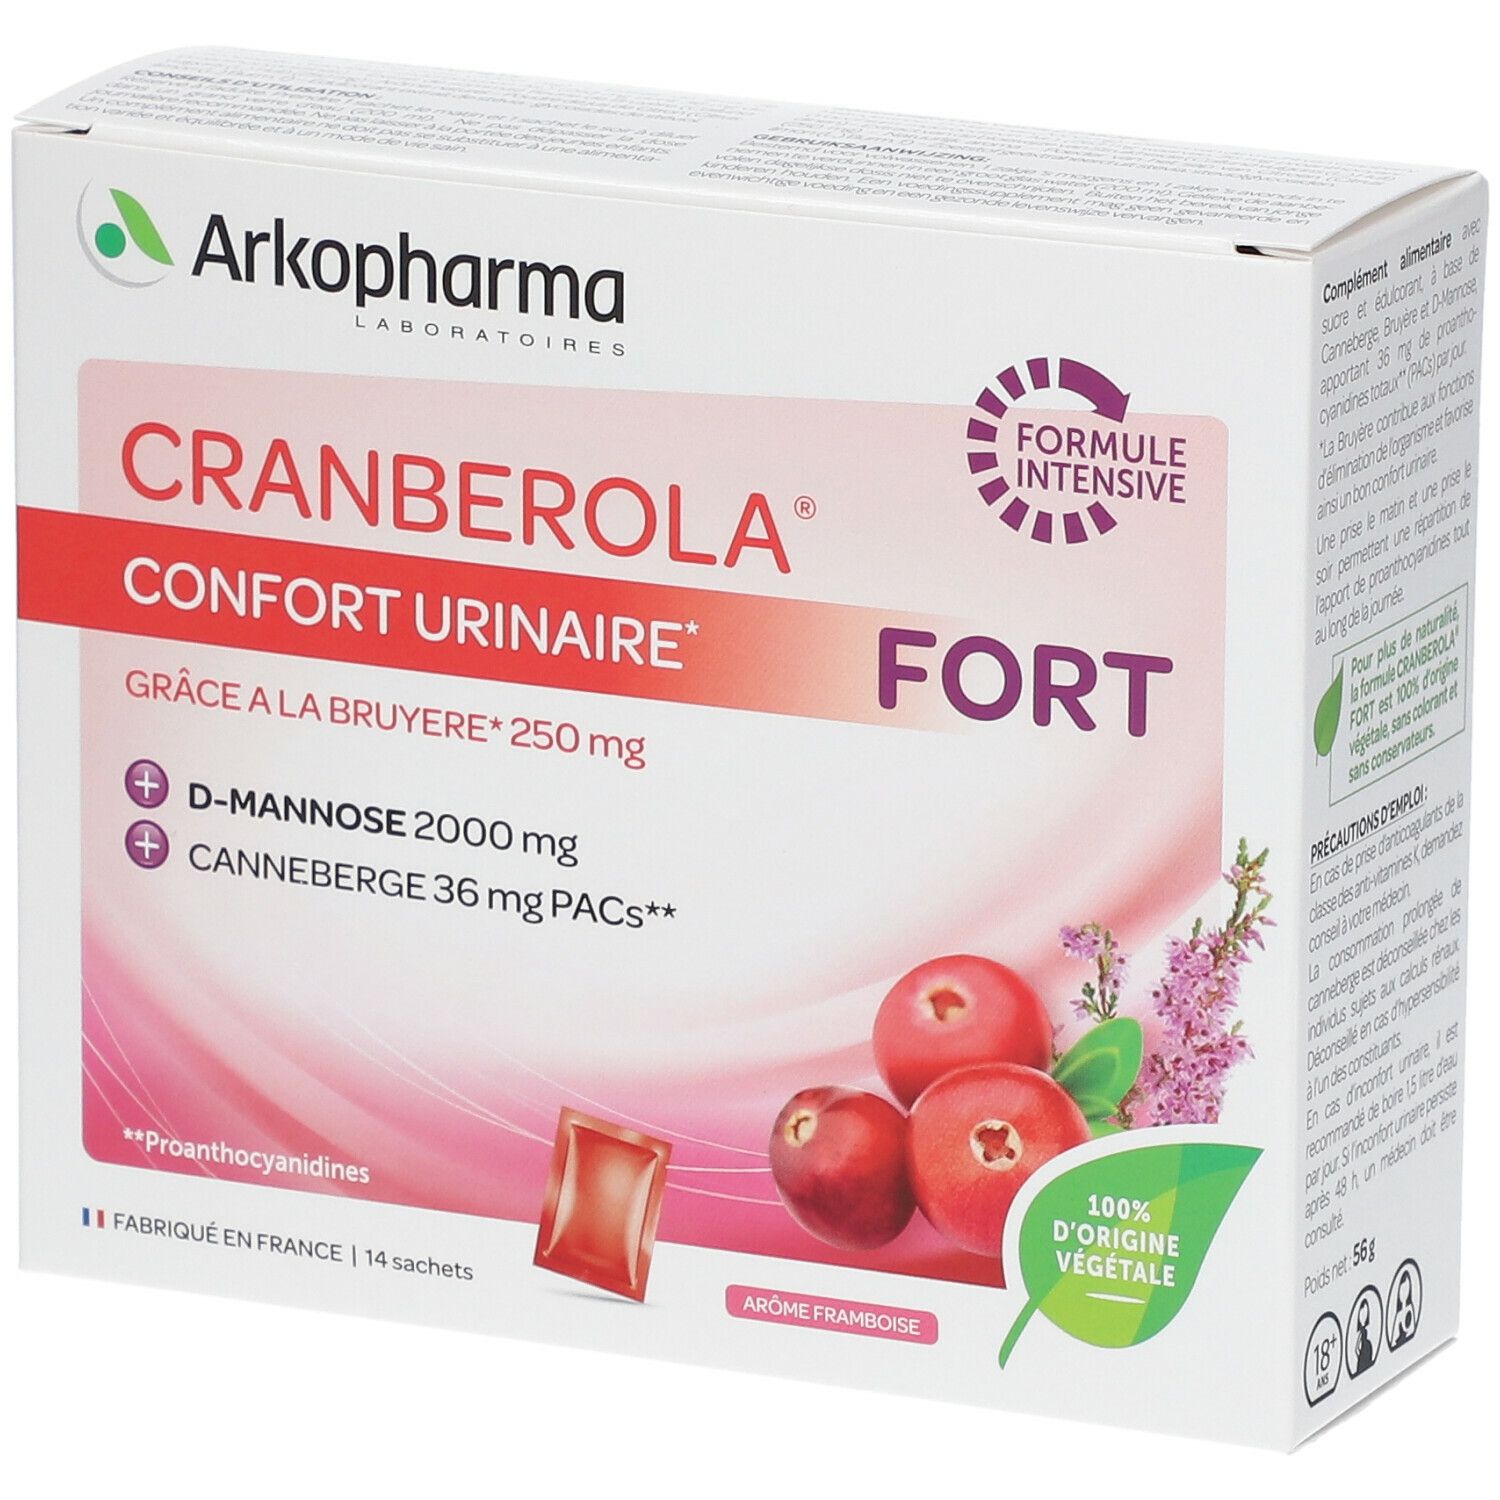 Image of Arkopharma CRANBEROLA® FORT